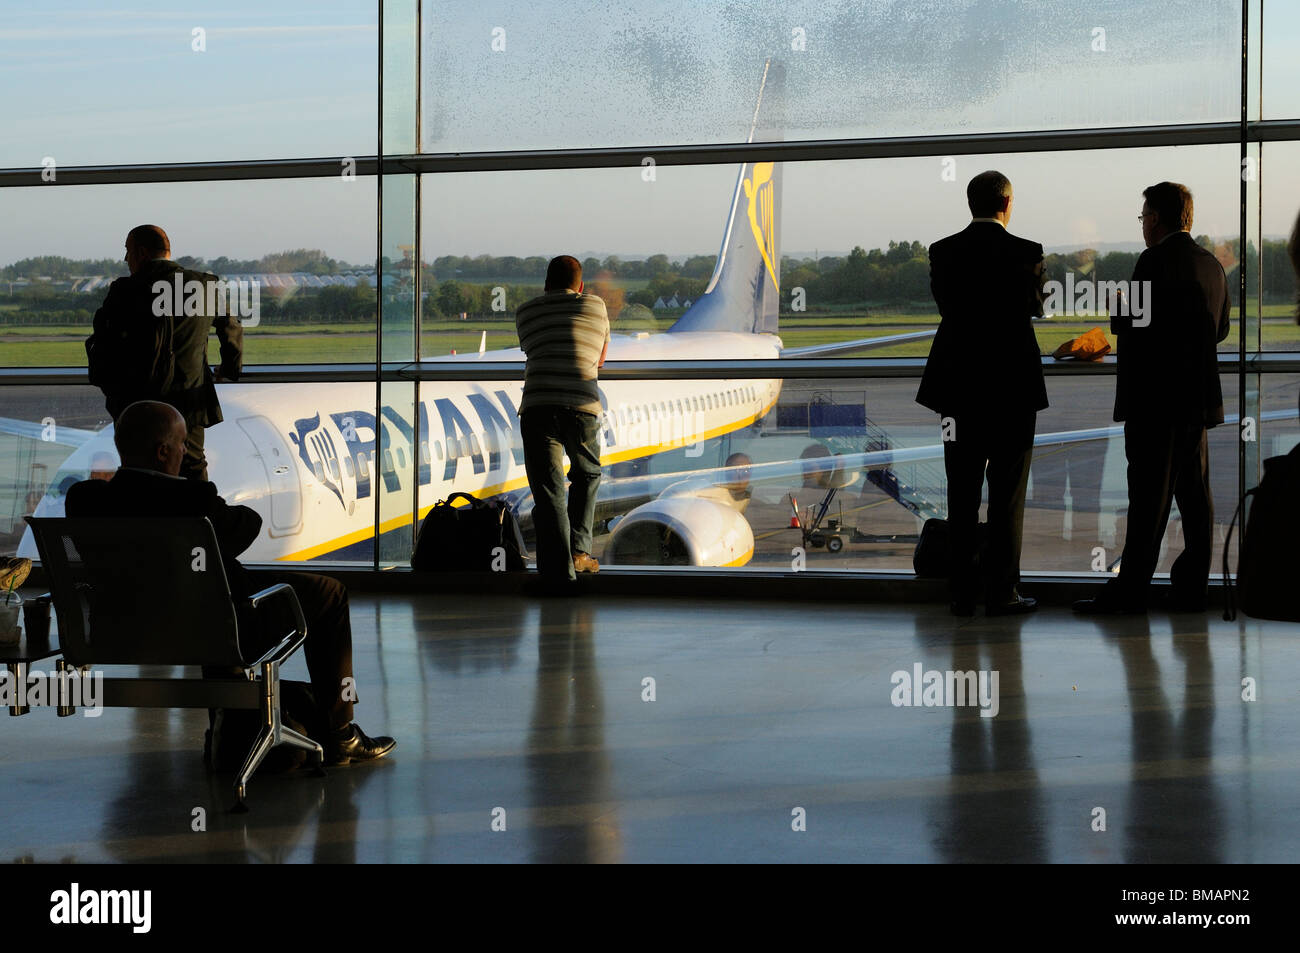 Dublin International Airport Terminal Interior With Passengers Waiting BMAPN2 